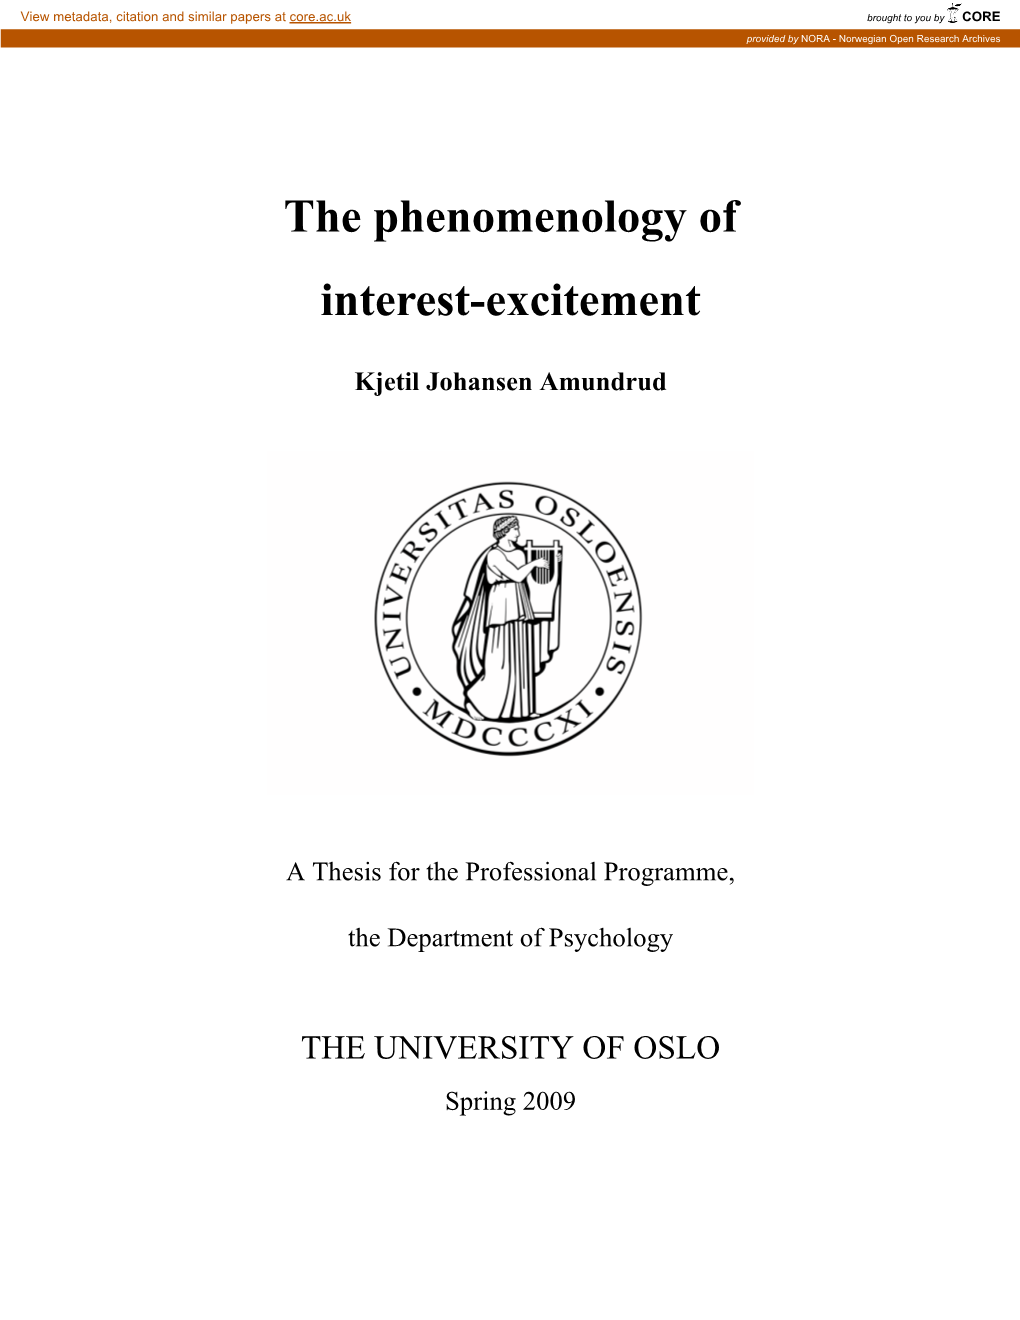 The Phenomenology of Interest-Excitement